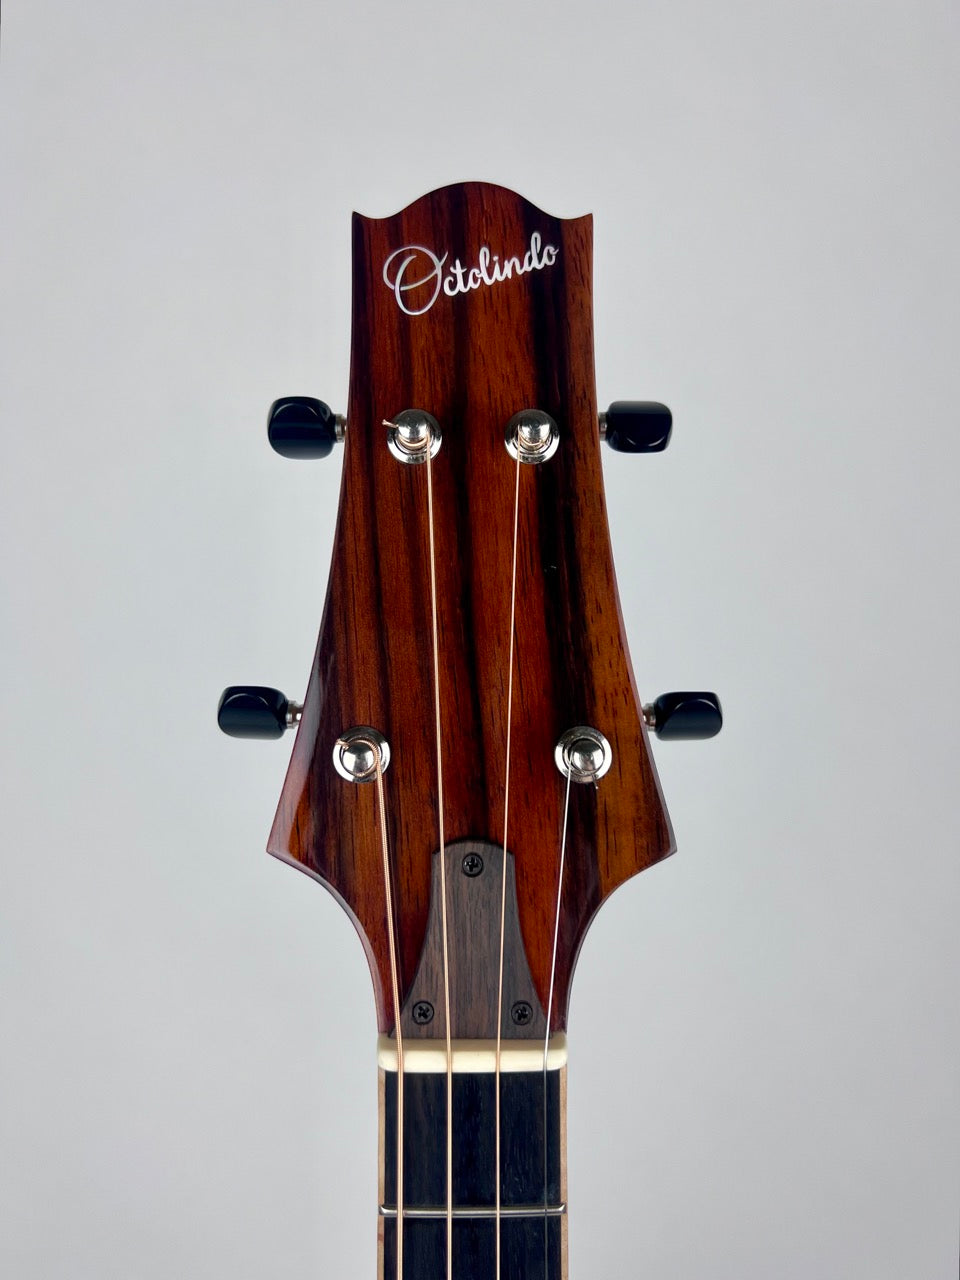 KR Strings Octolindo Artist Series Tenor Guitar